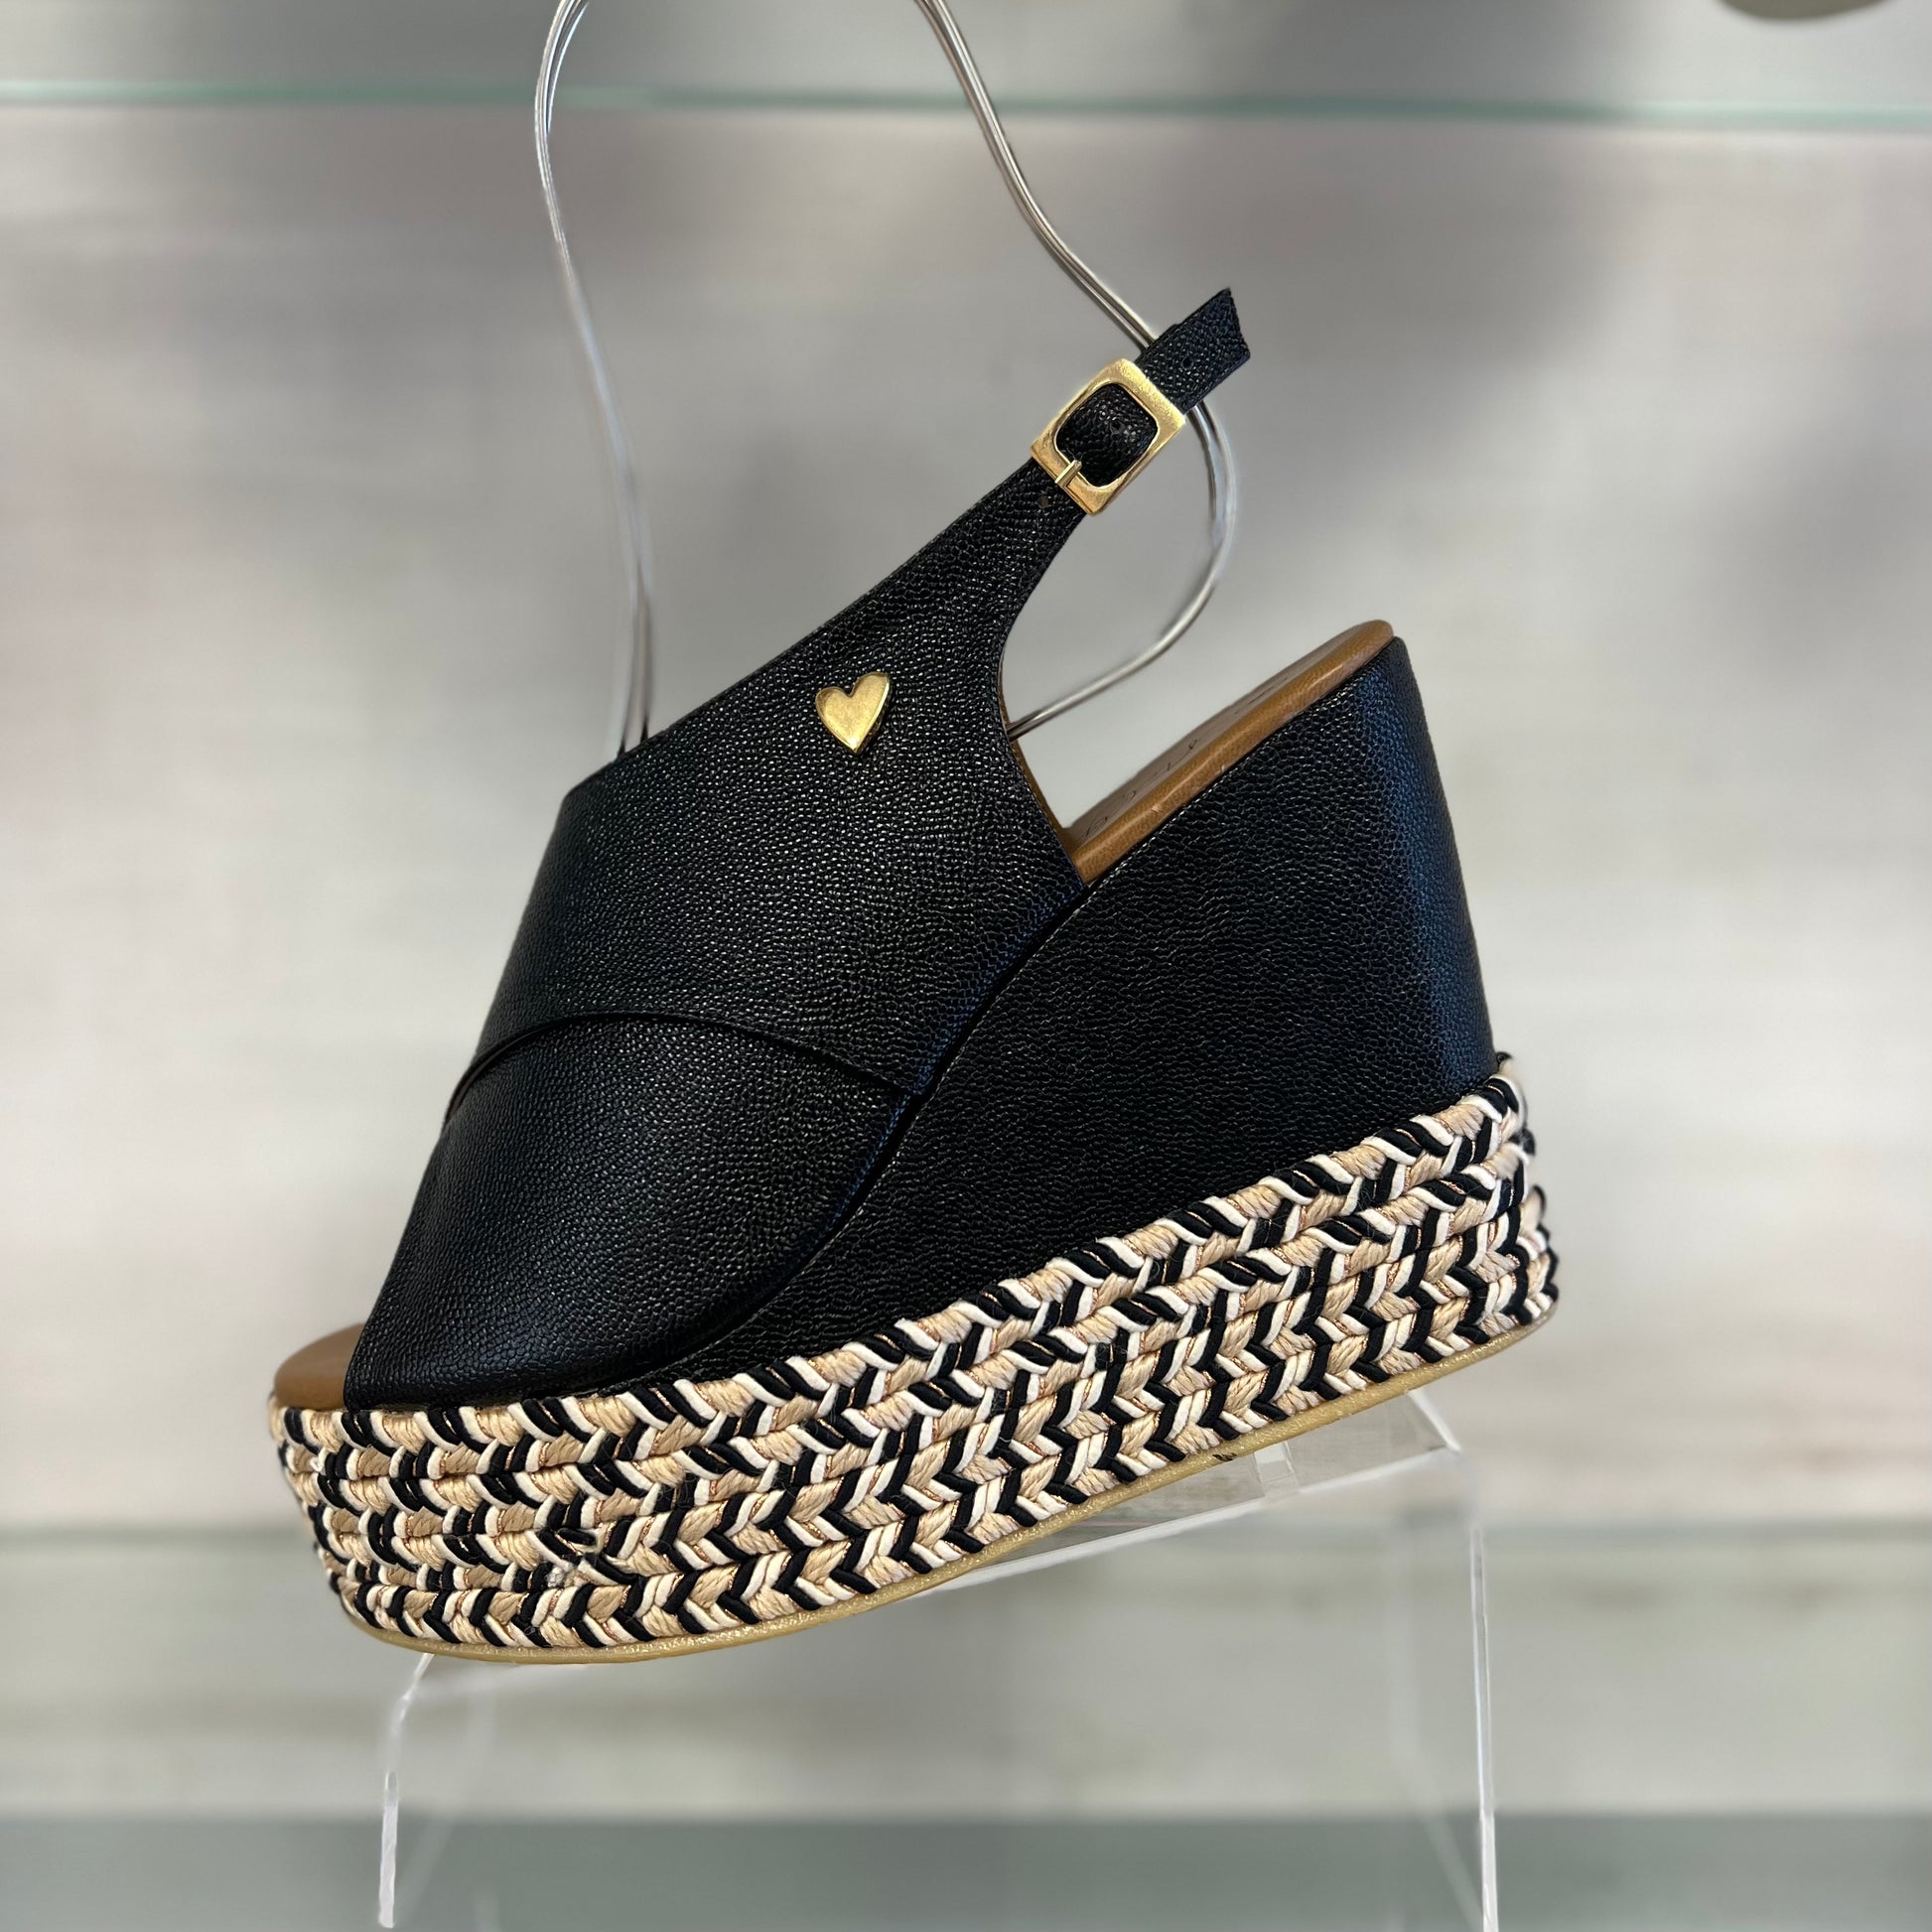 Tasya Sandals Black - Leather